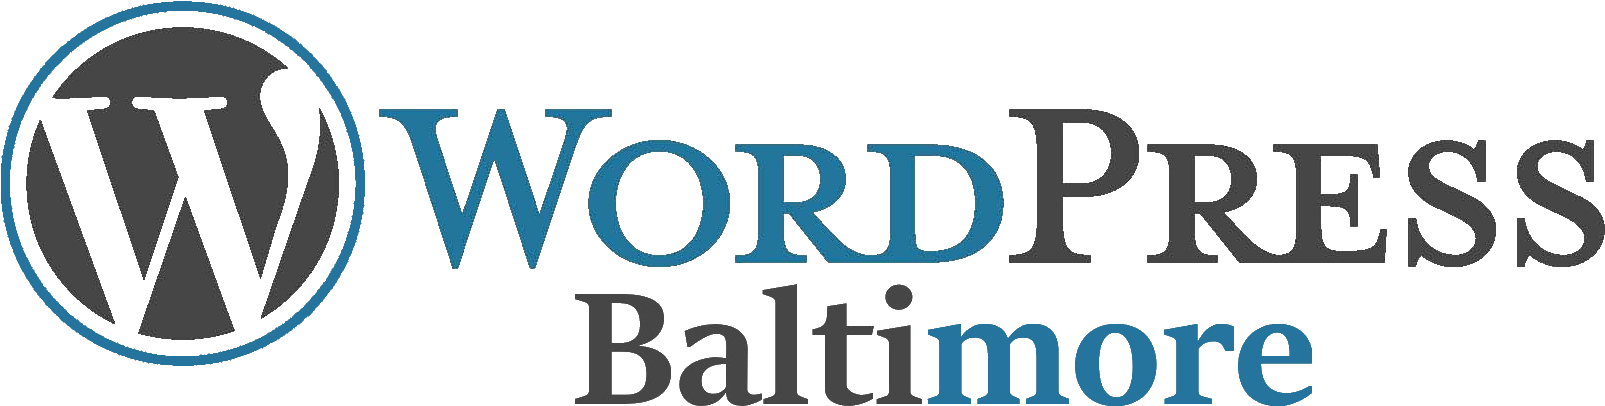 Wordpress Baltimore - Design - Development - Support - Data Entry Clerk (1800x600)